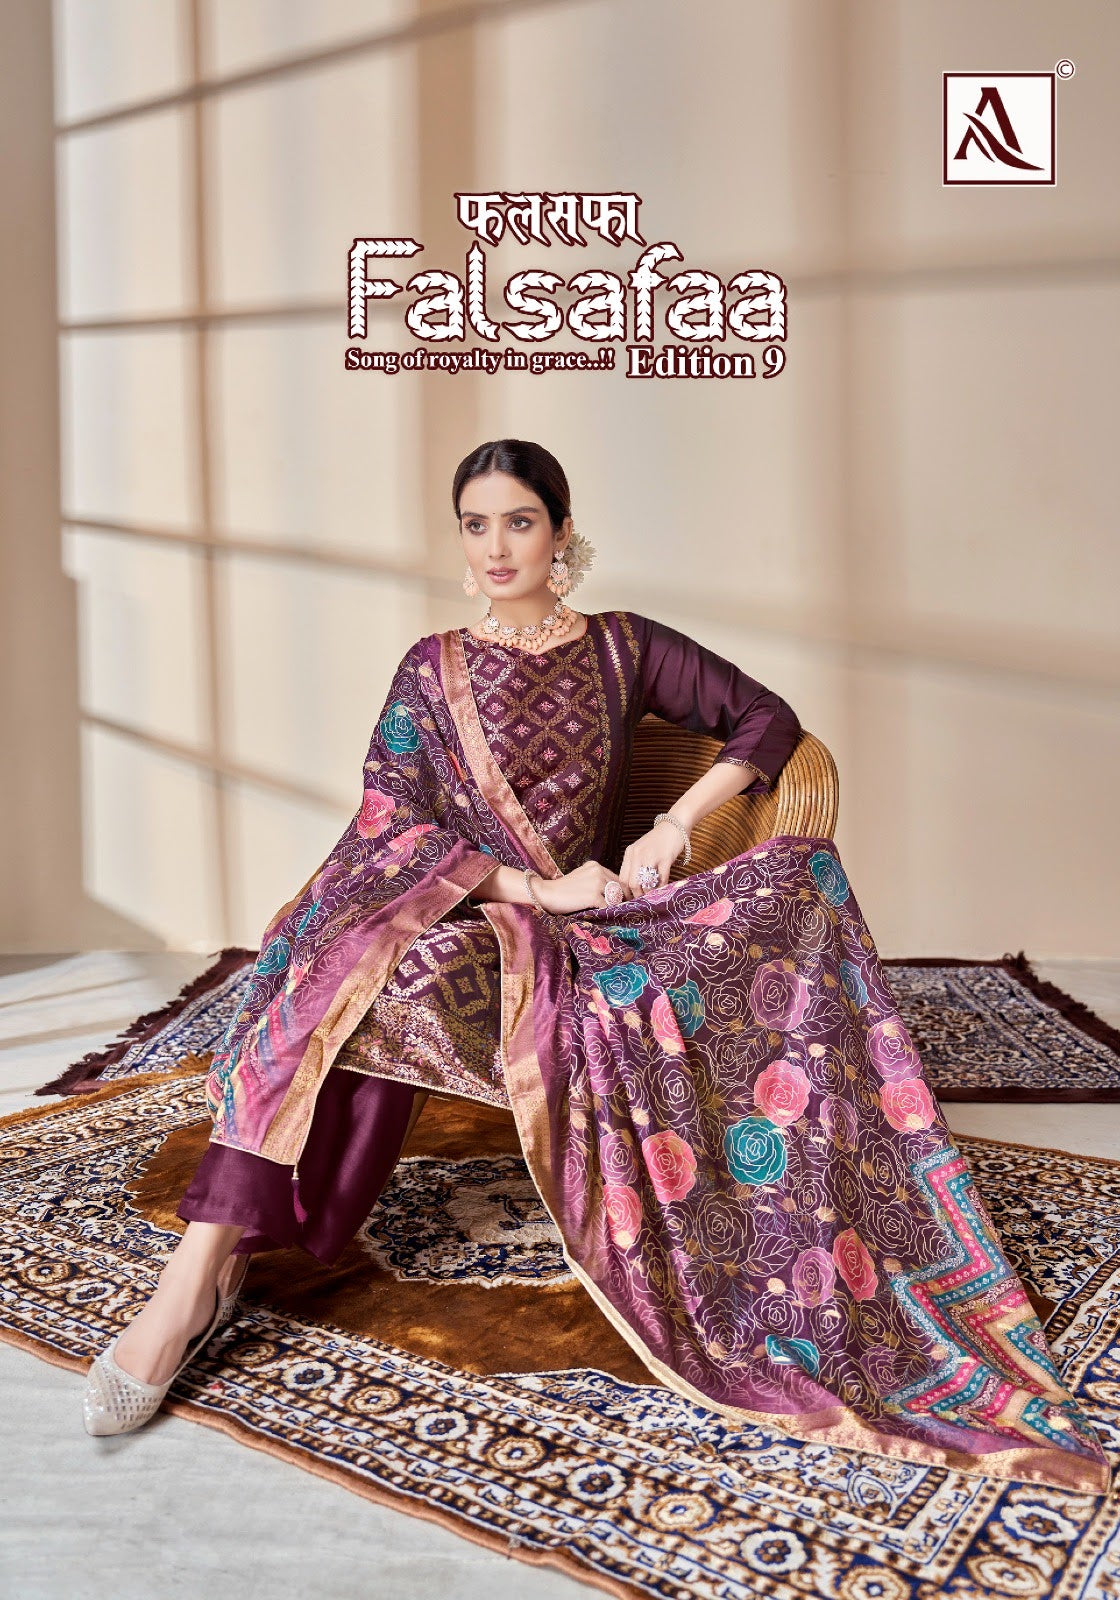 Falsafaa Edition 9 Alok Dola Jacquard Plazzo Style Suits